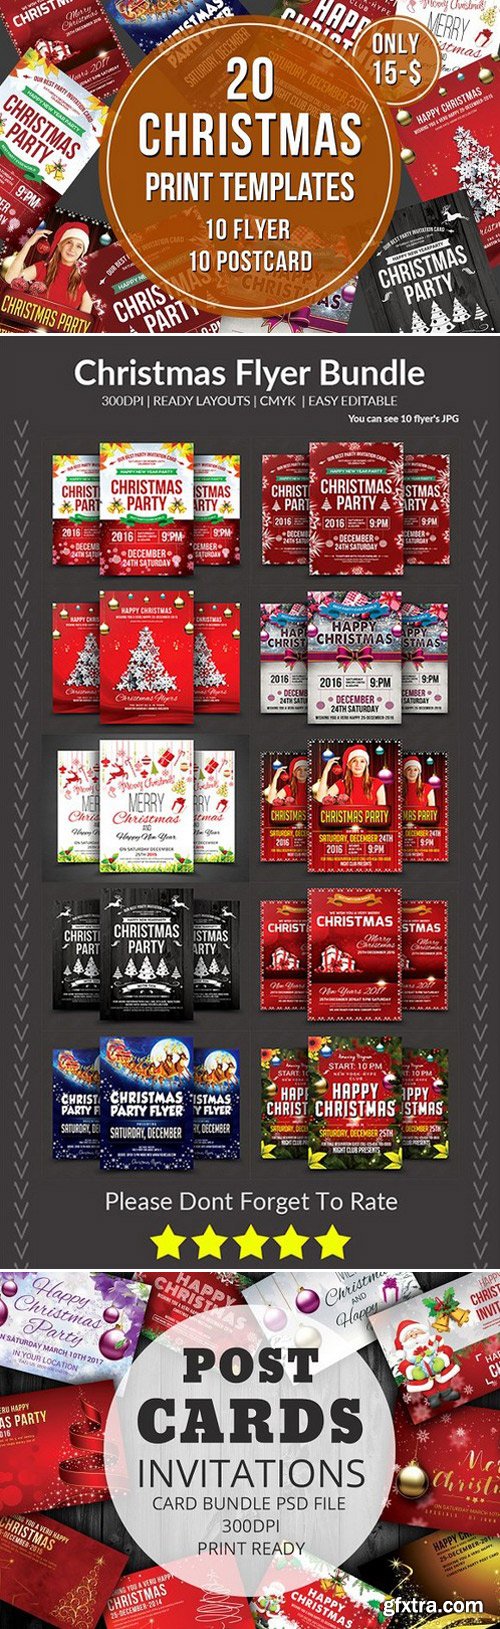 CM - Christmas Flyer & Postcard Bundle 972729